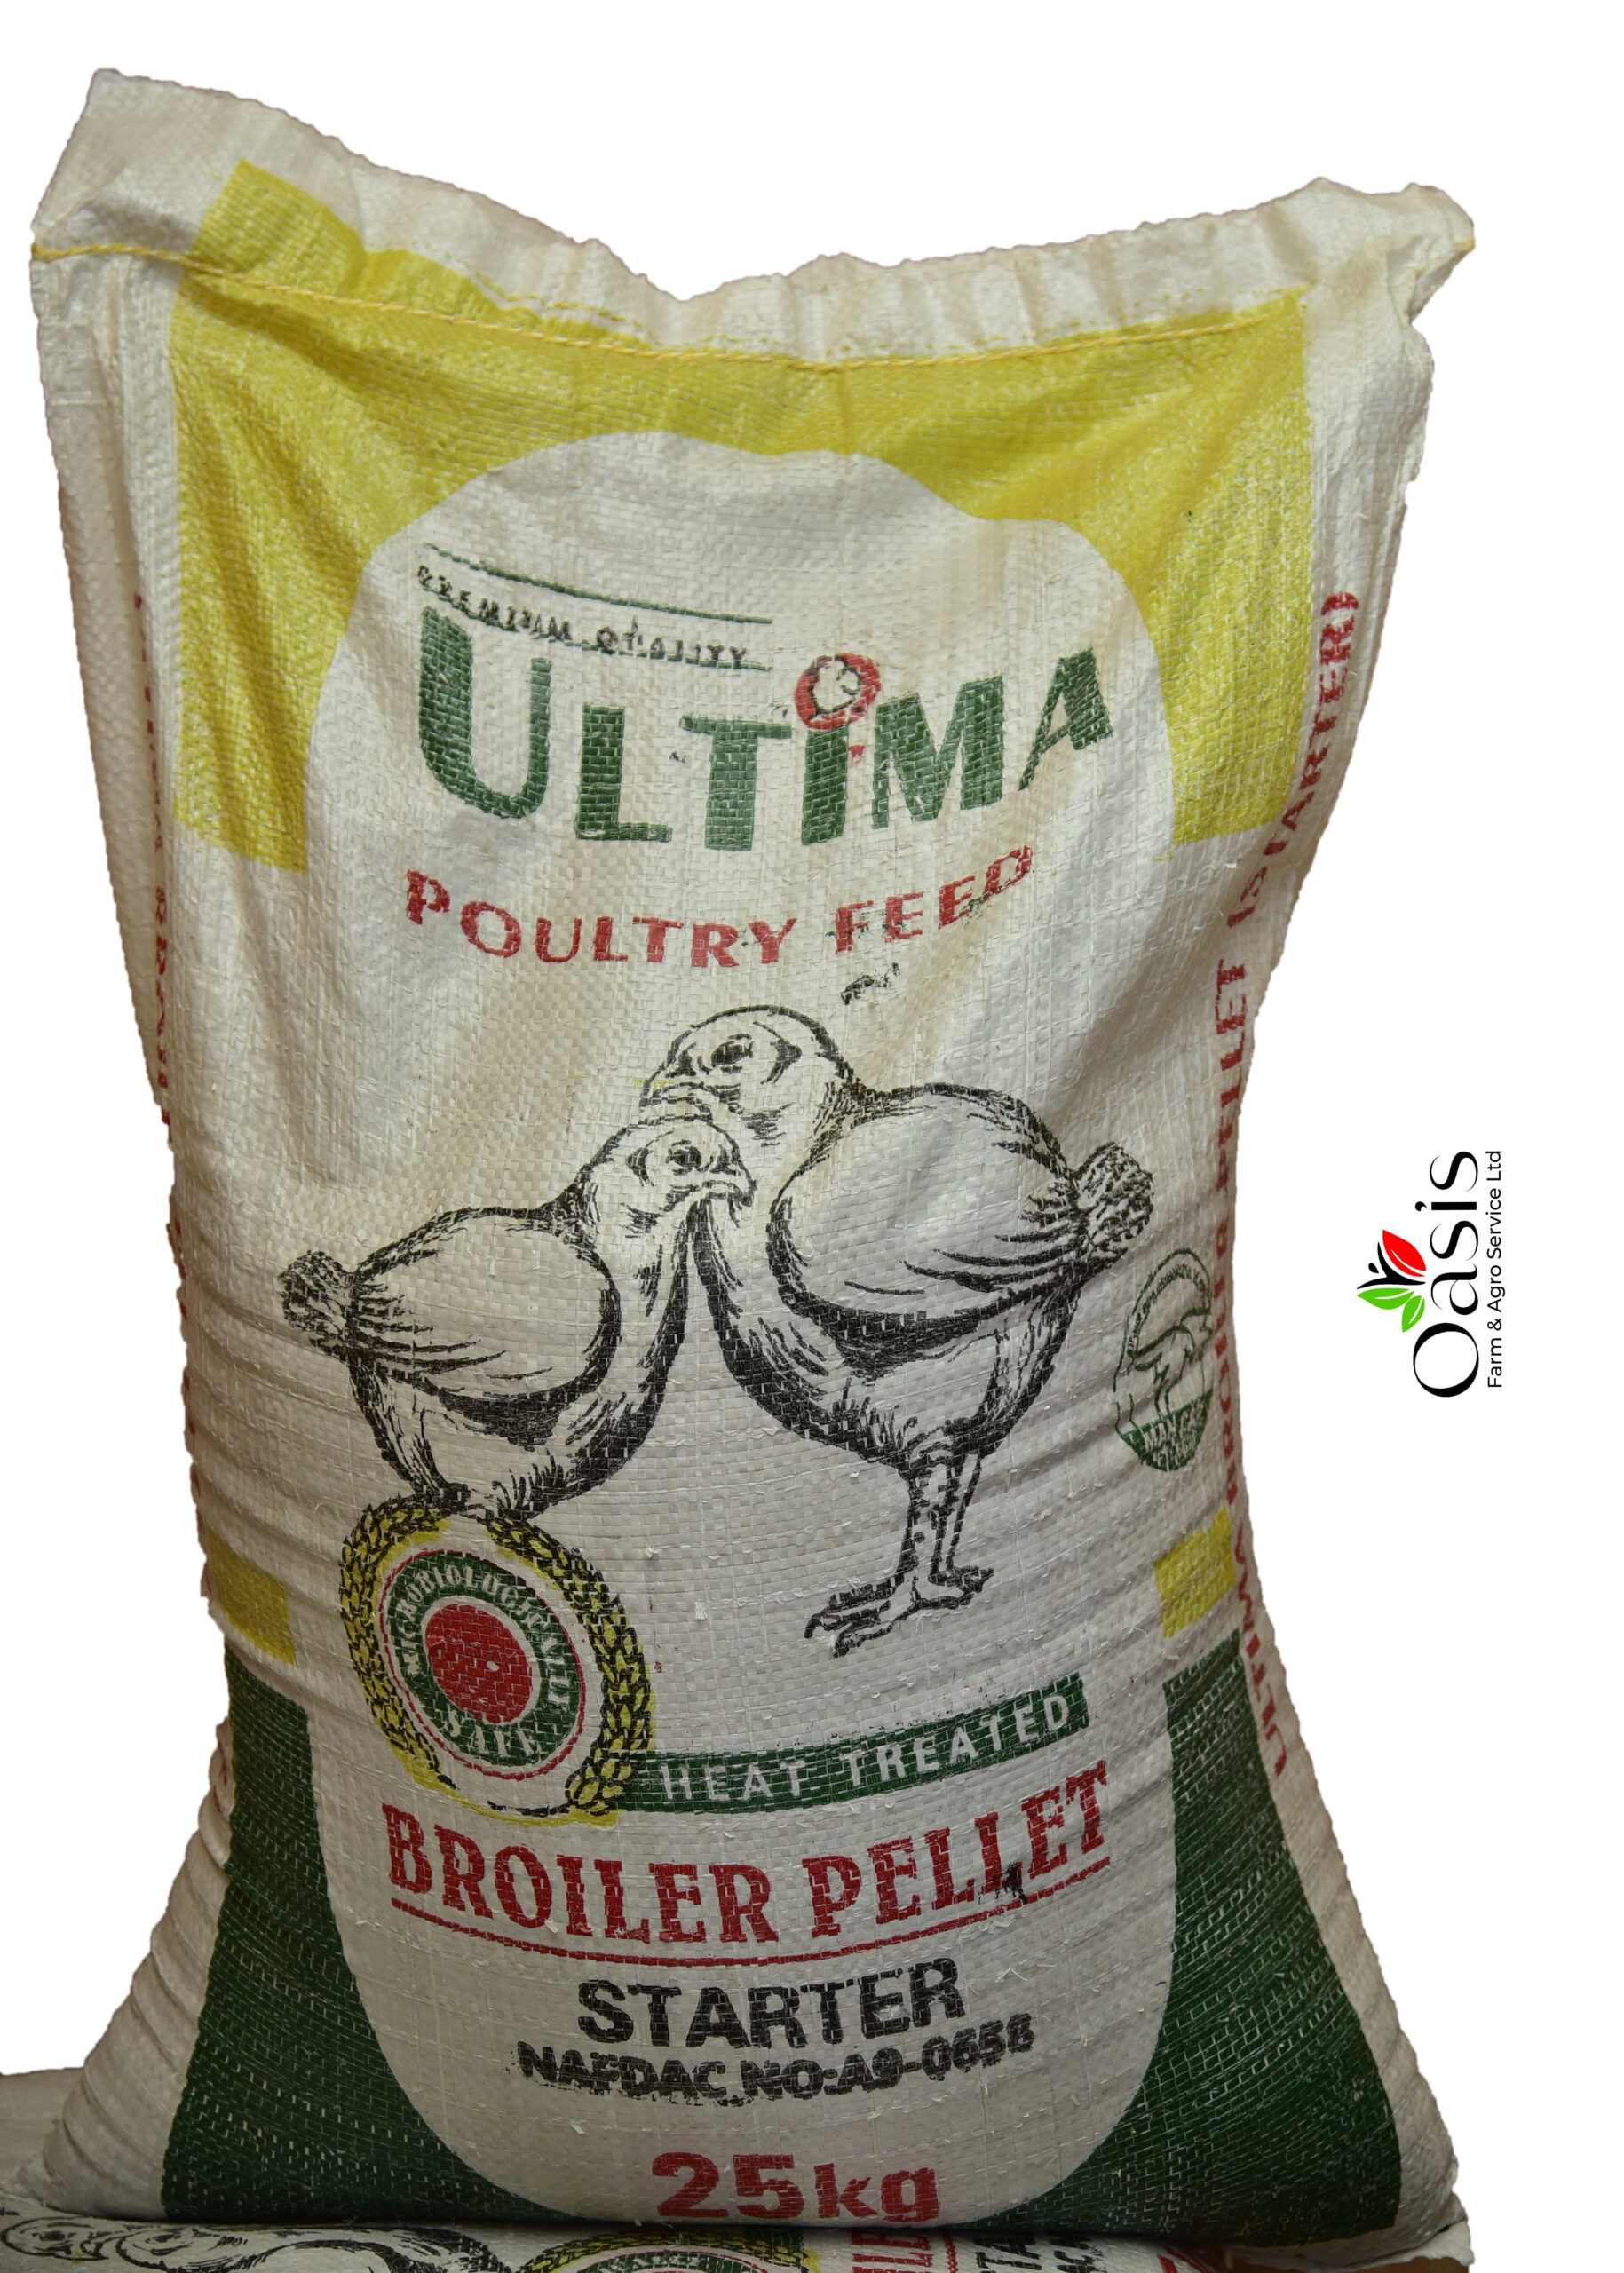 Ultima Poultry Feed Broiler Pellet Starter (25kg)